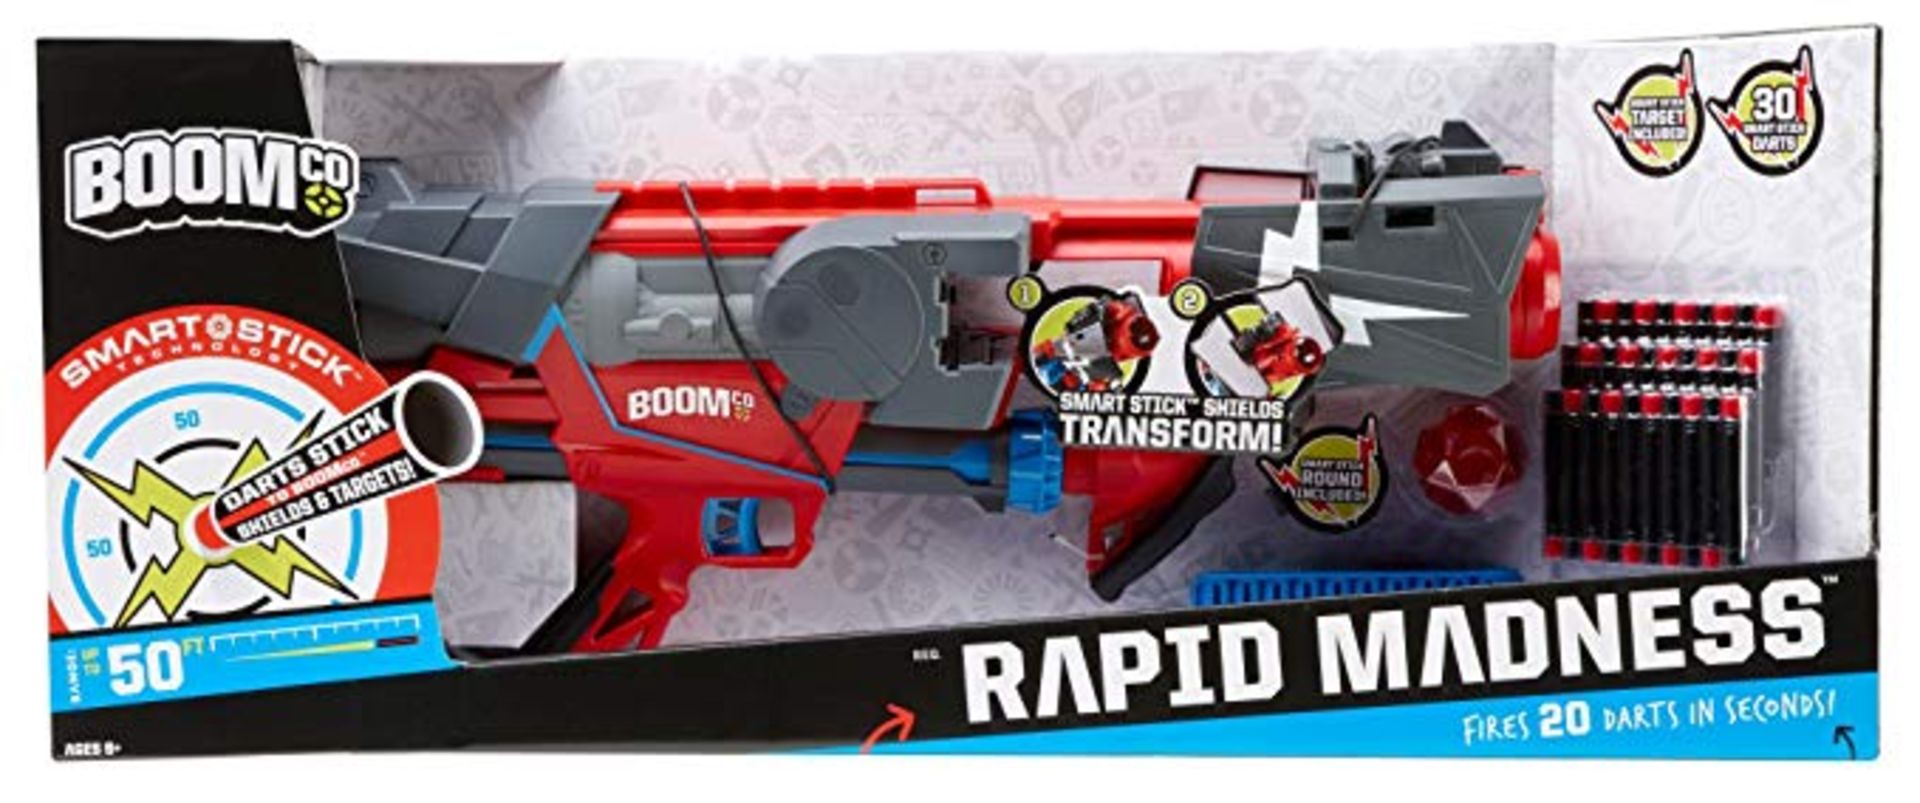 81 X Boomco Rapid Madness Blaster (Includes 30 Darts and Gun Clip - 50 Feet Range) RRP £2822.85